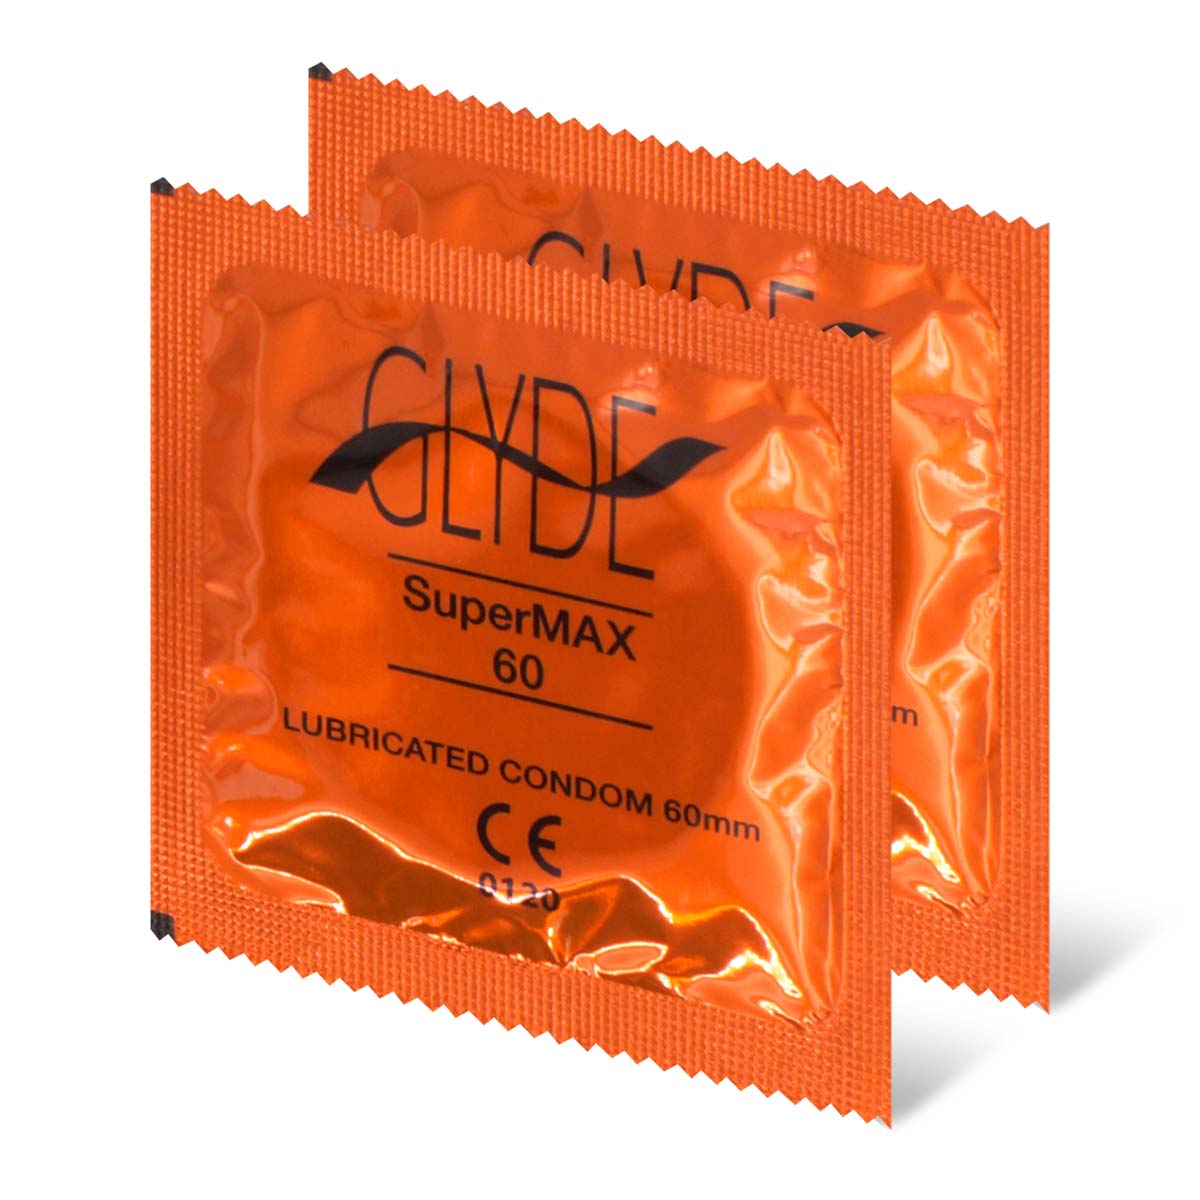 Glyde Vegan Condom Supermax 60mm 2's Pack Latex Condom-p_1